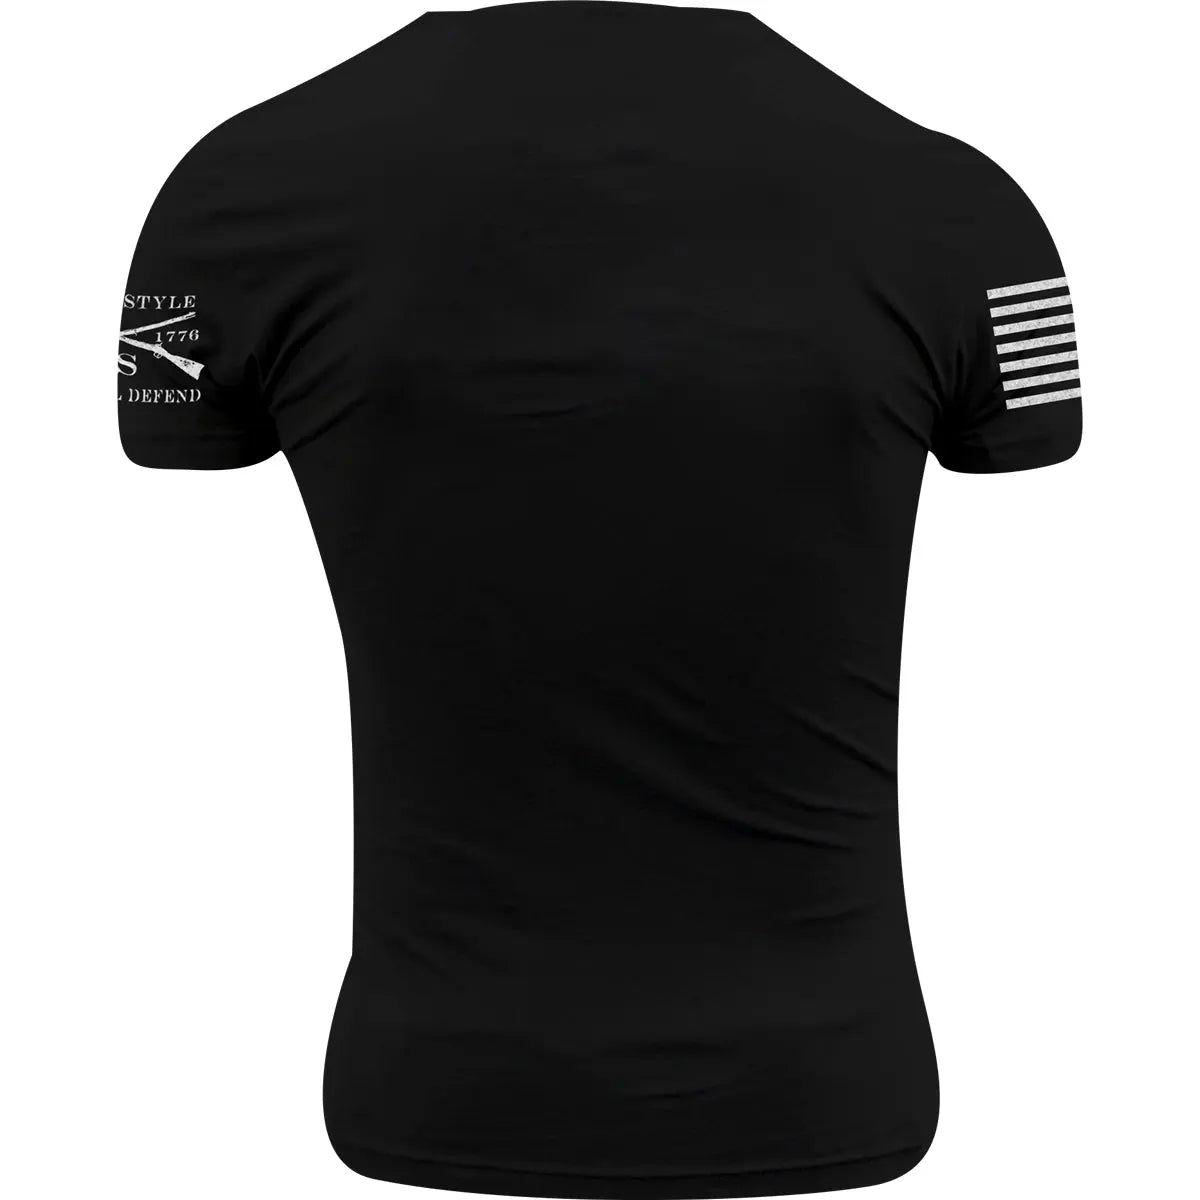 Grunt Style FAFO T-Shirt - Black Grunt Style